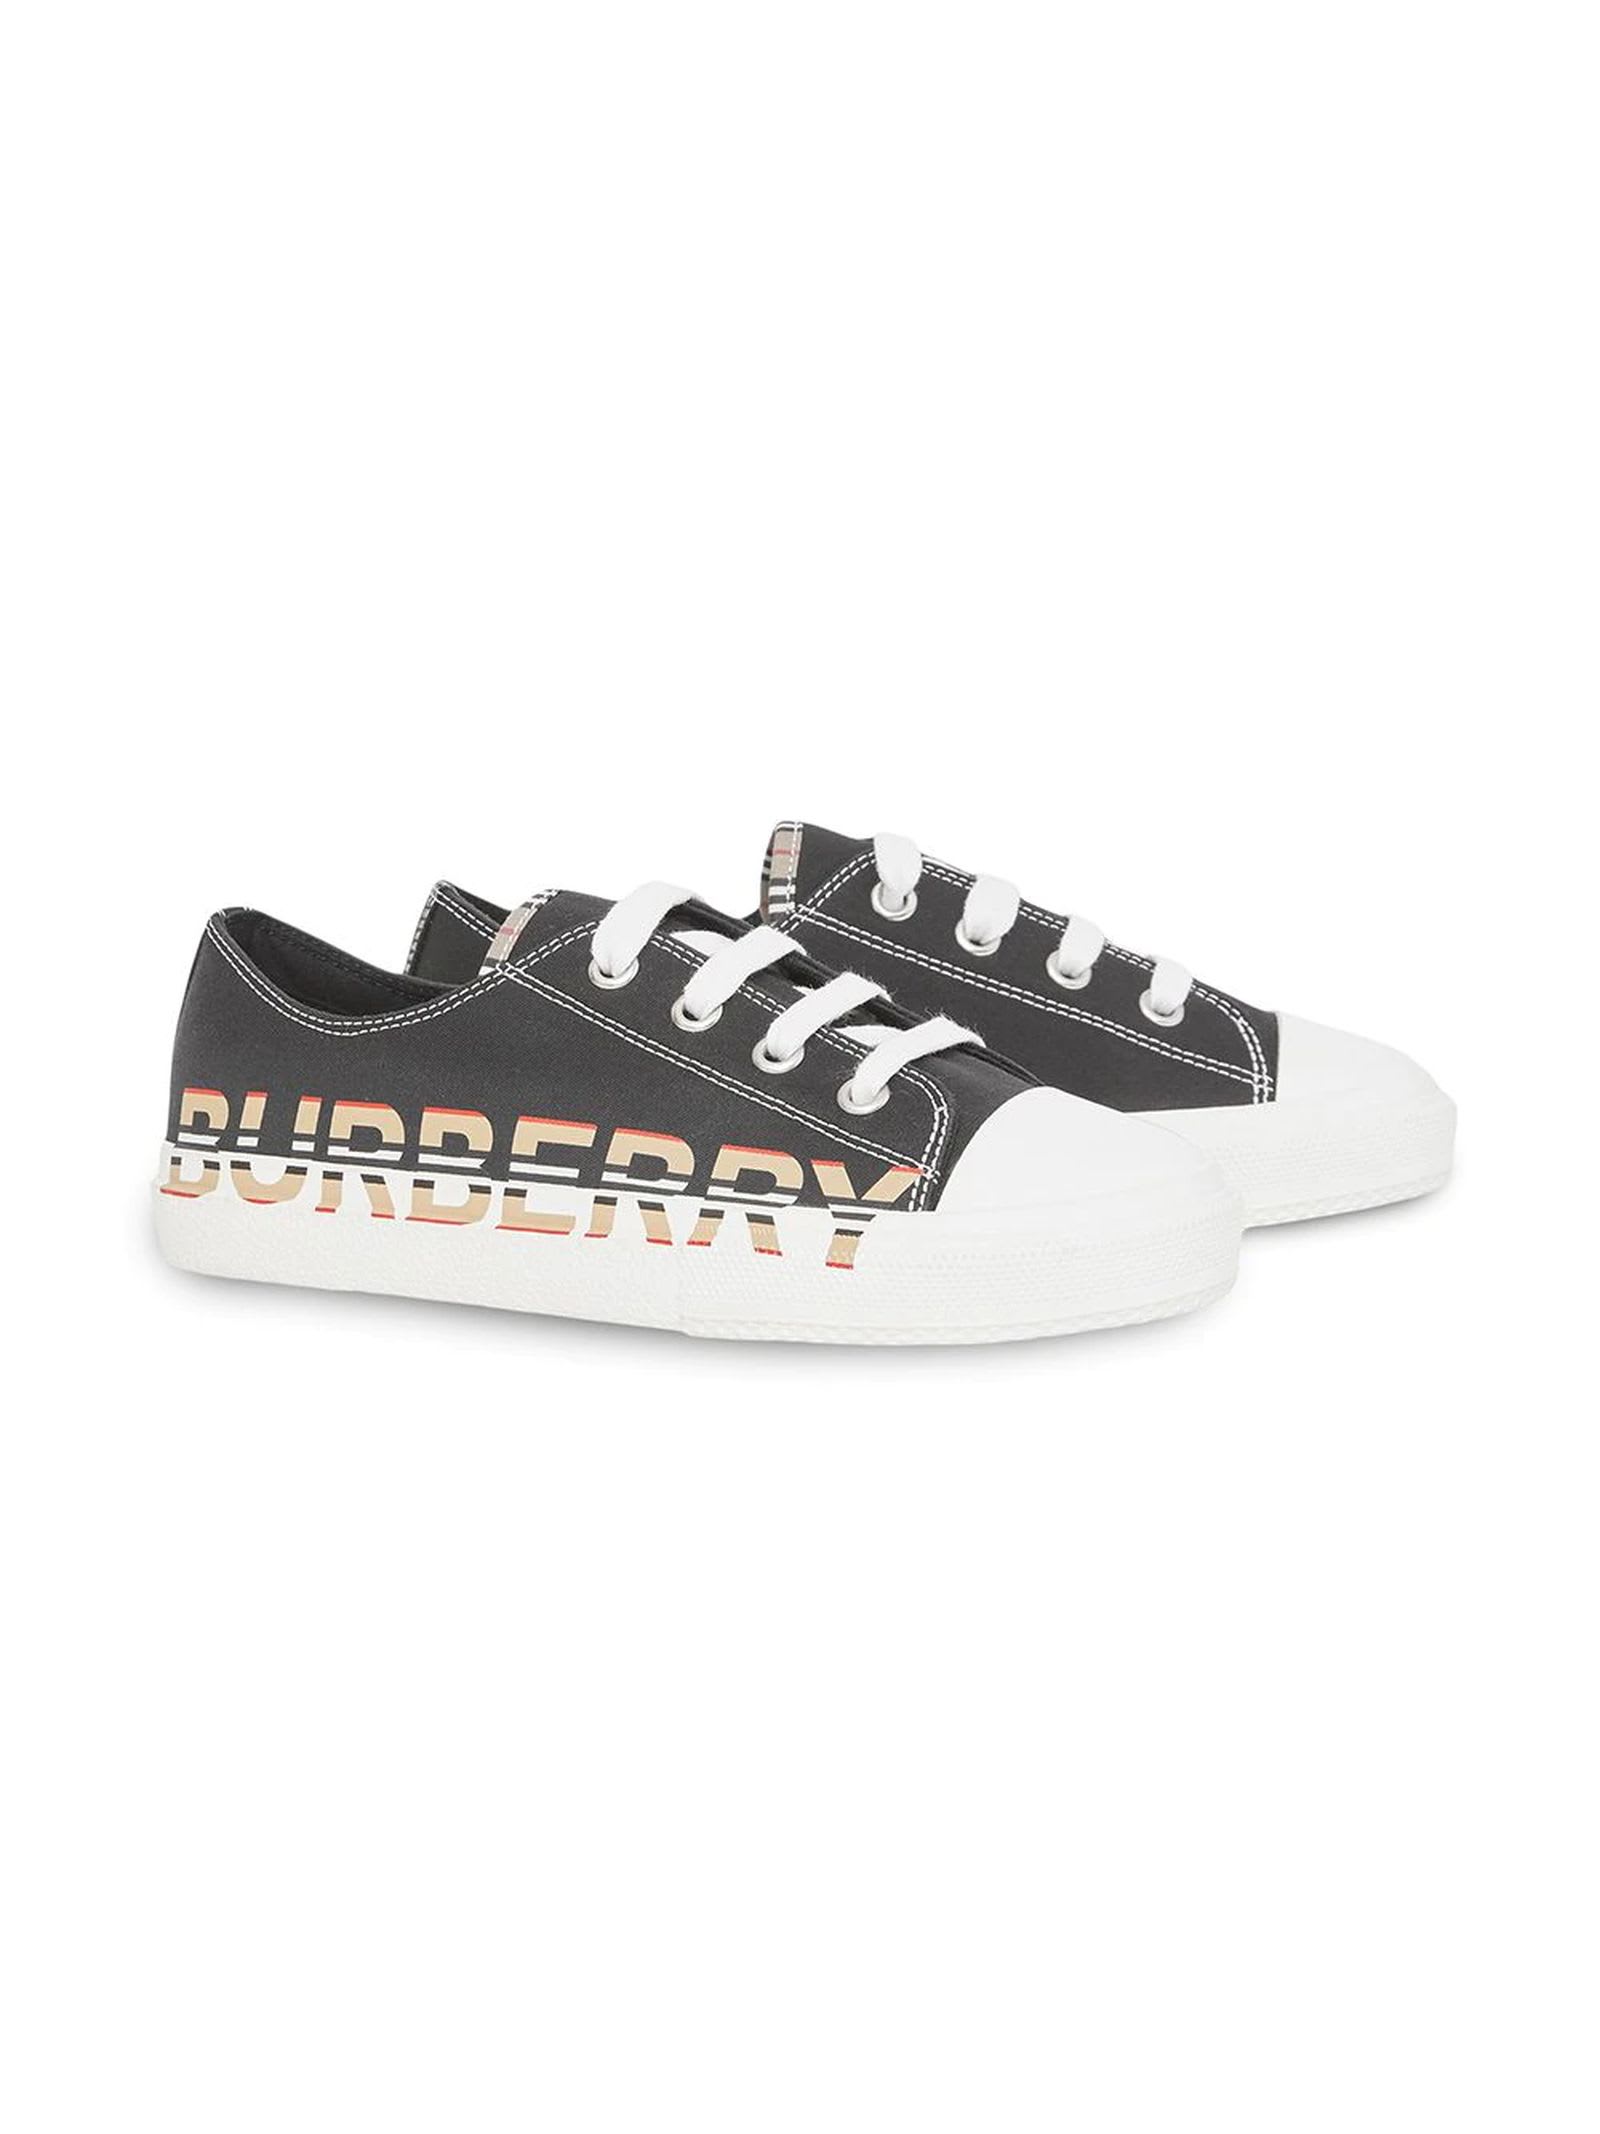 Burberry Black Cotton Sneakers